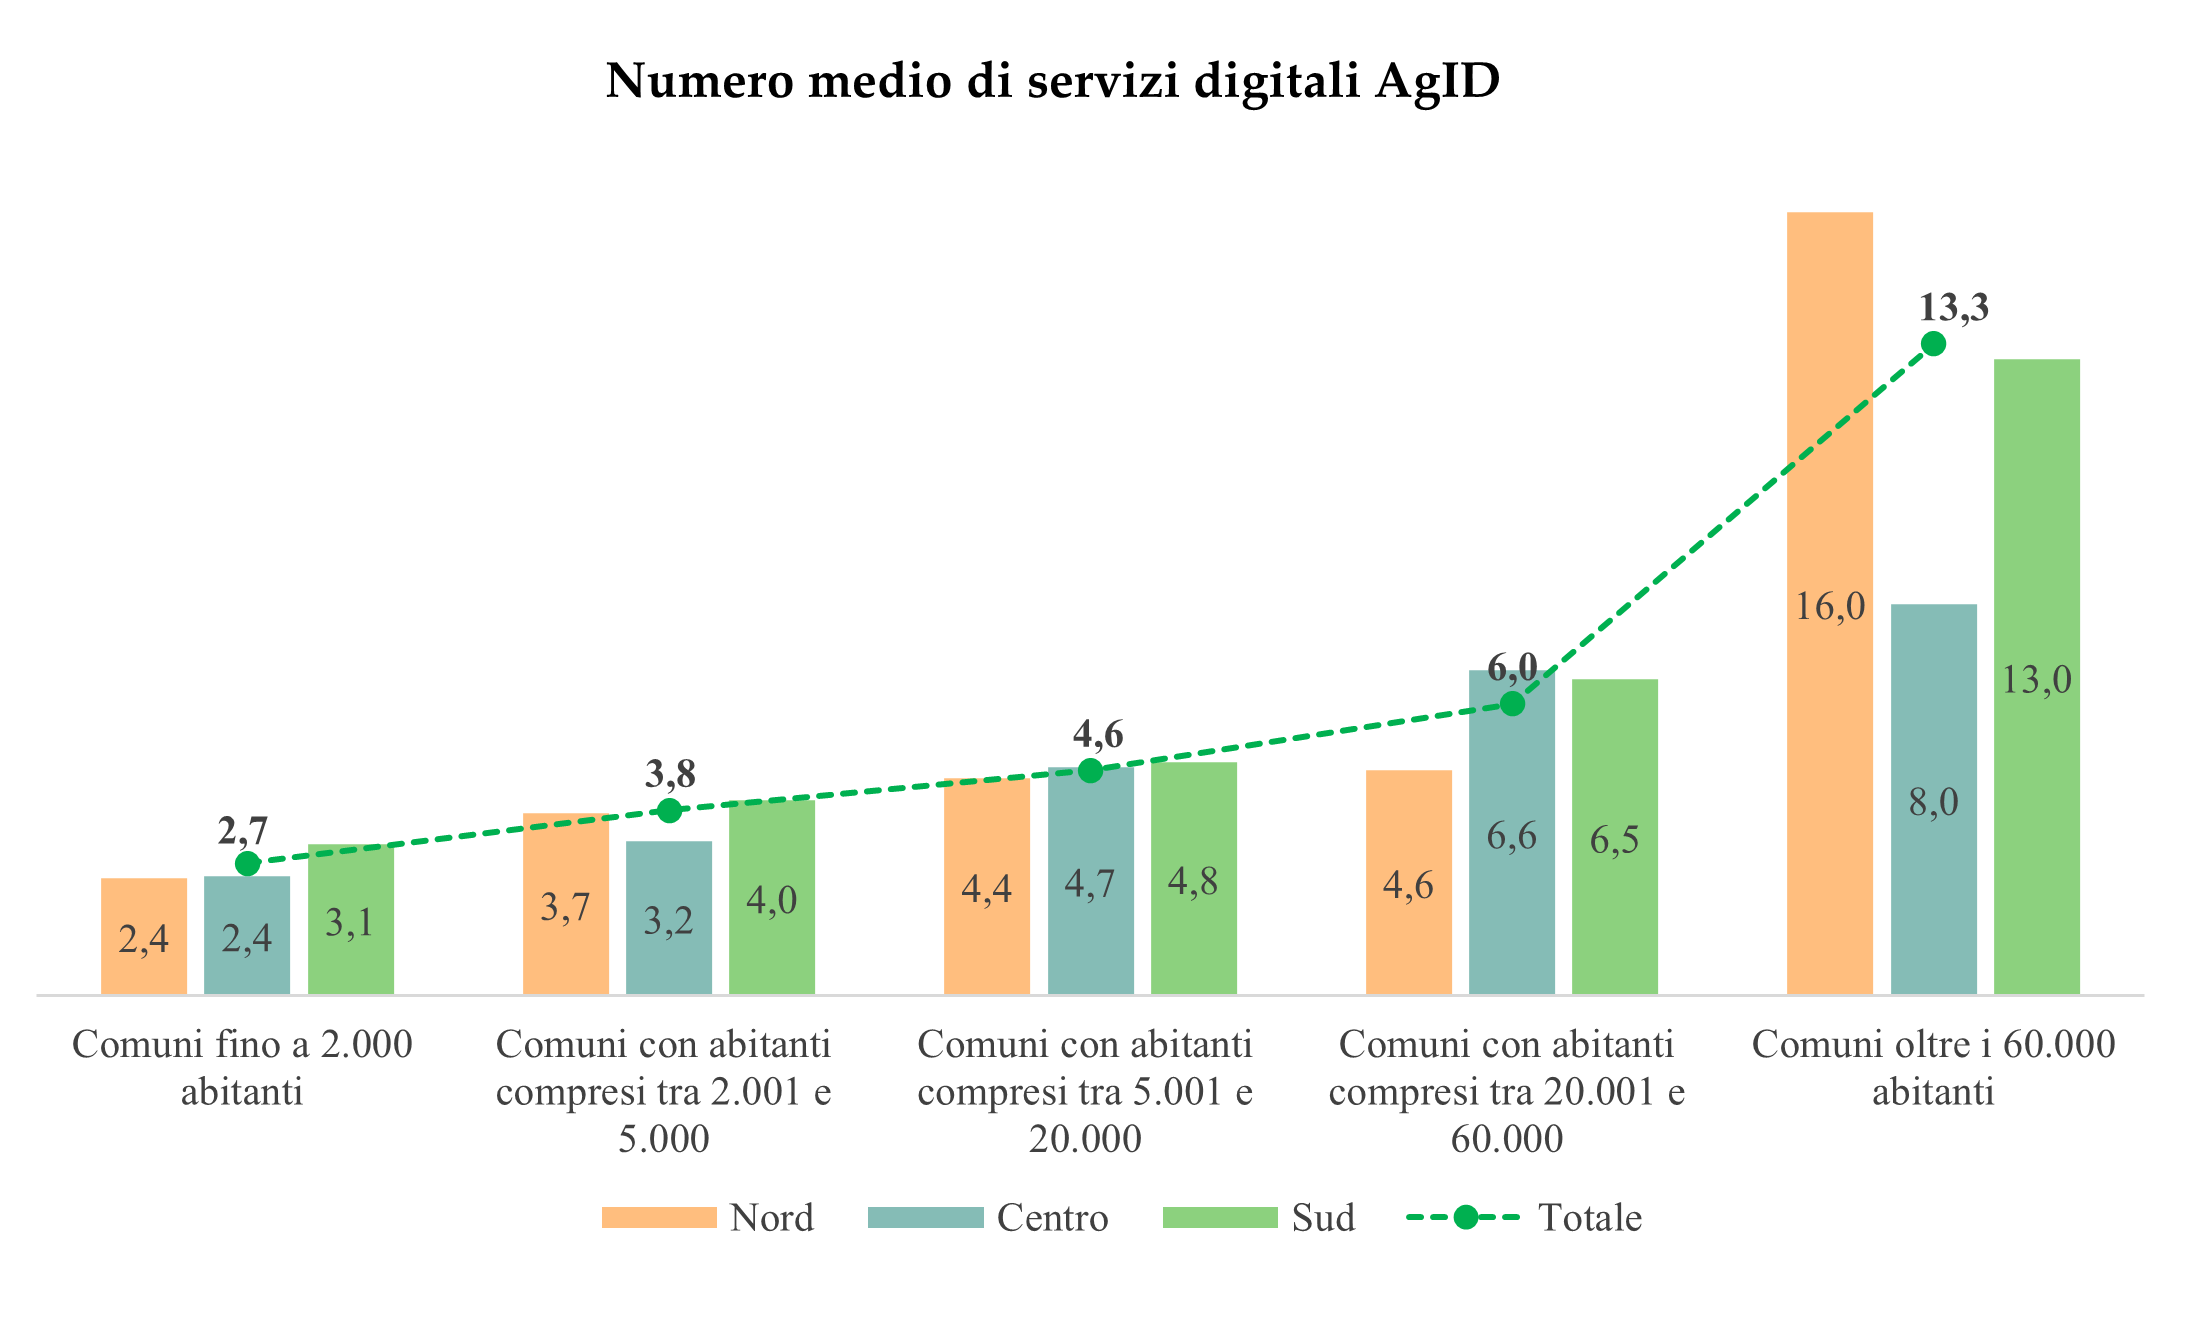 Digital services in Italian Municipalities